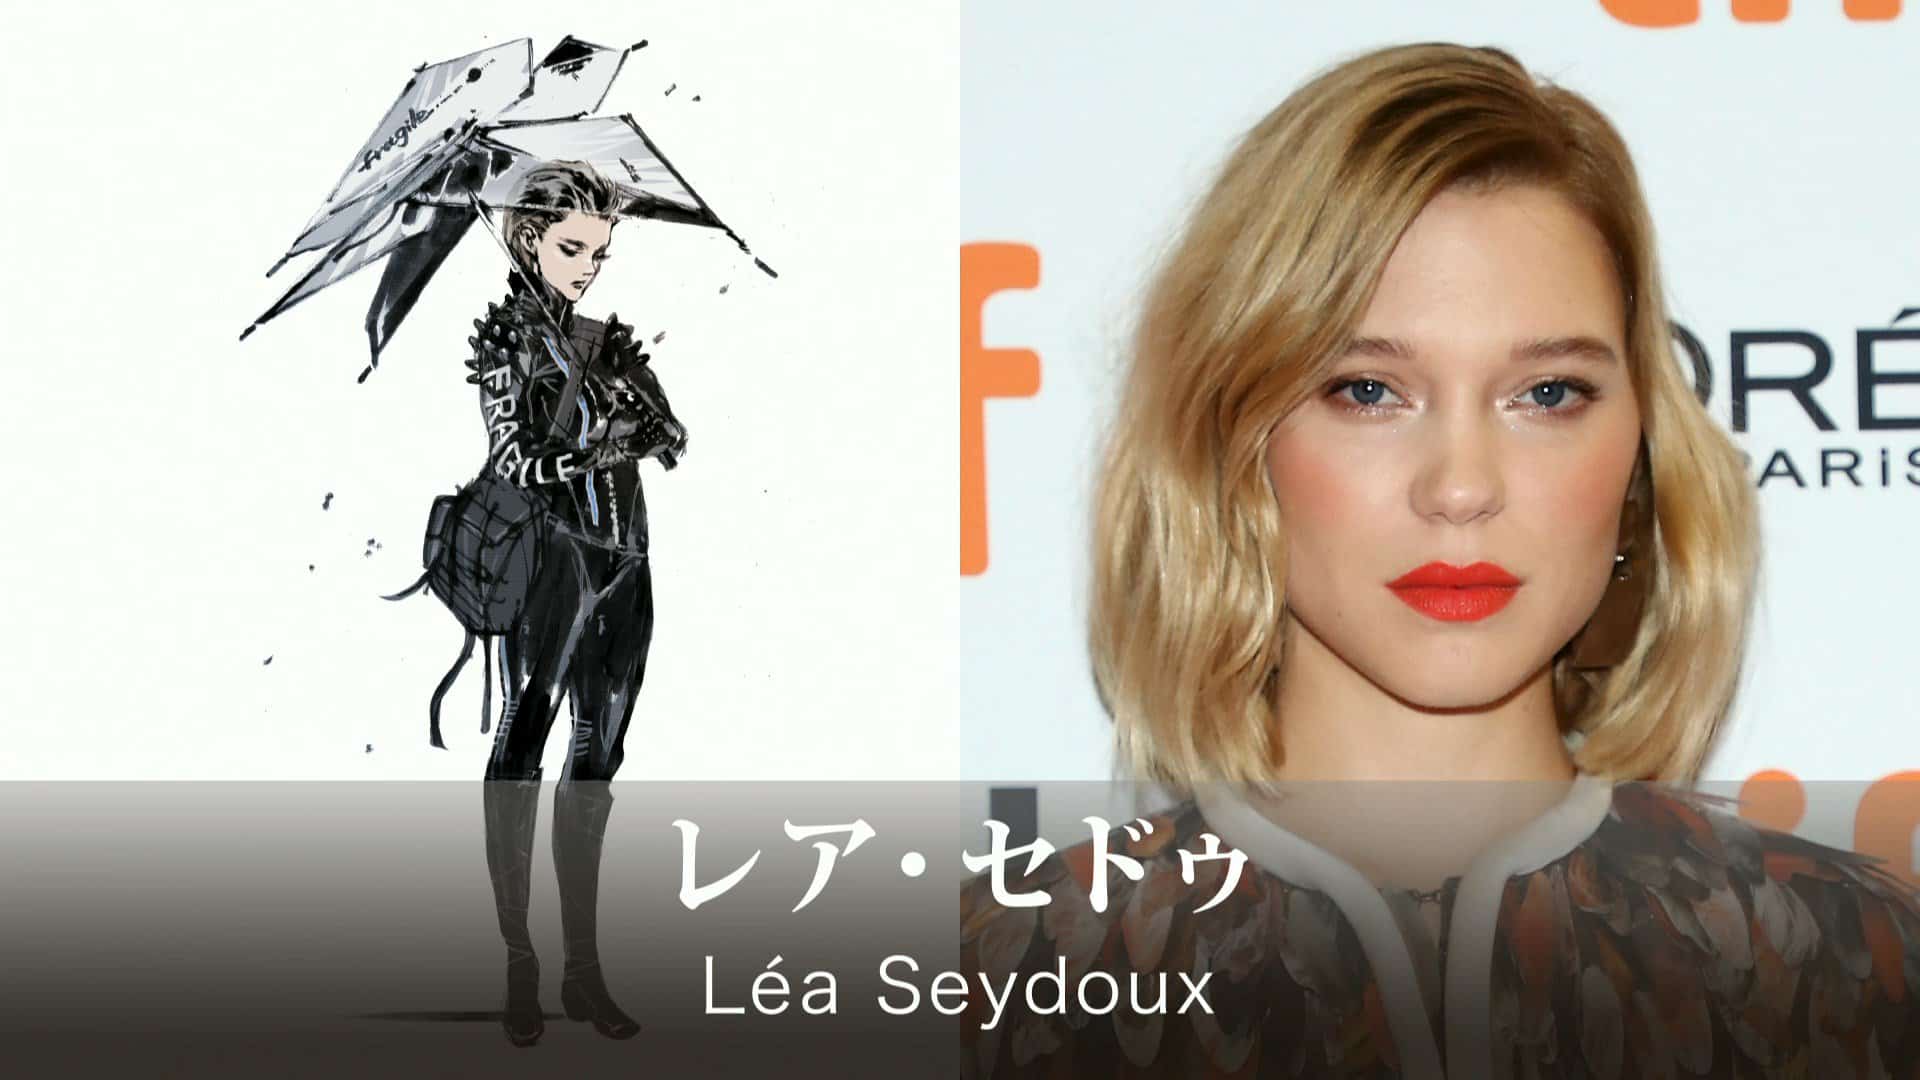 Death Stranding Lea Seydoux’s Character - 1920 x 1080 jpeg 204kB